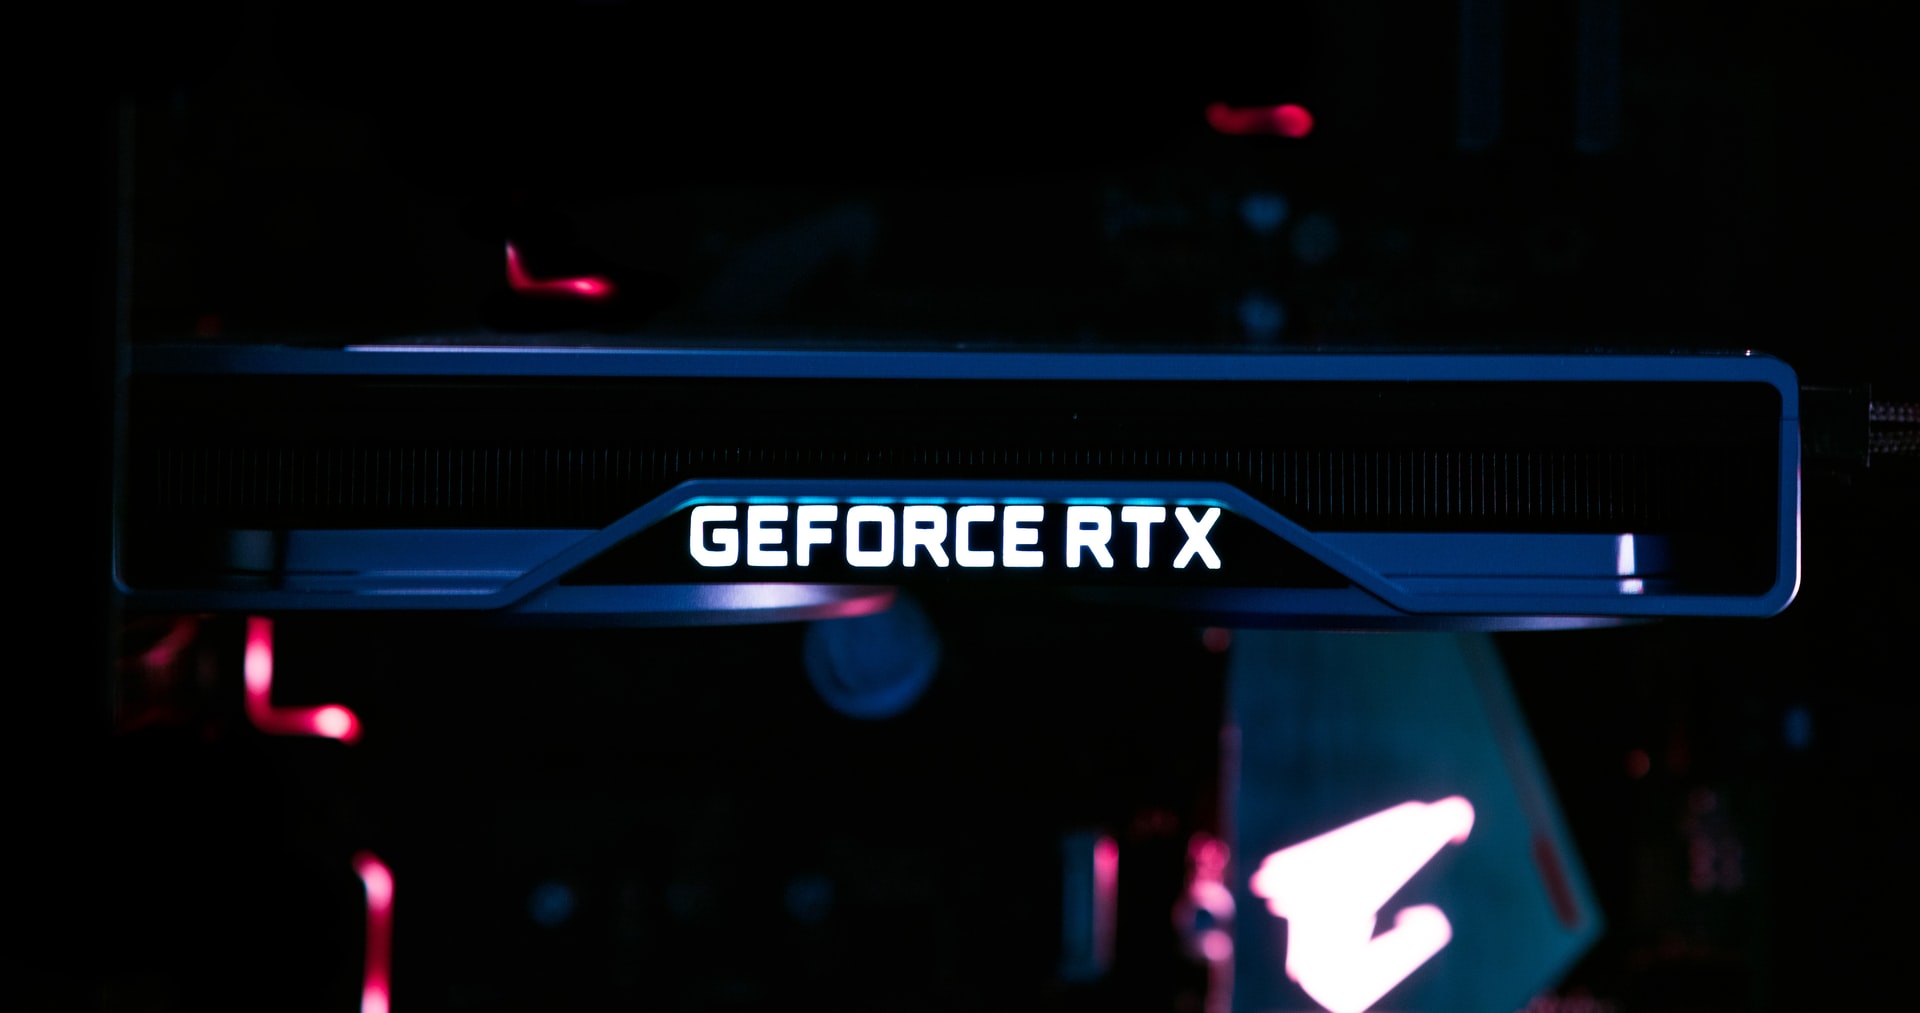 ## MSI Gaming GeForce RTX 2060 Graphic Card